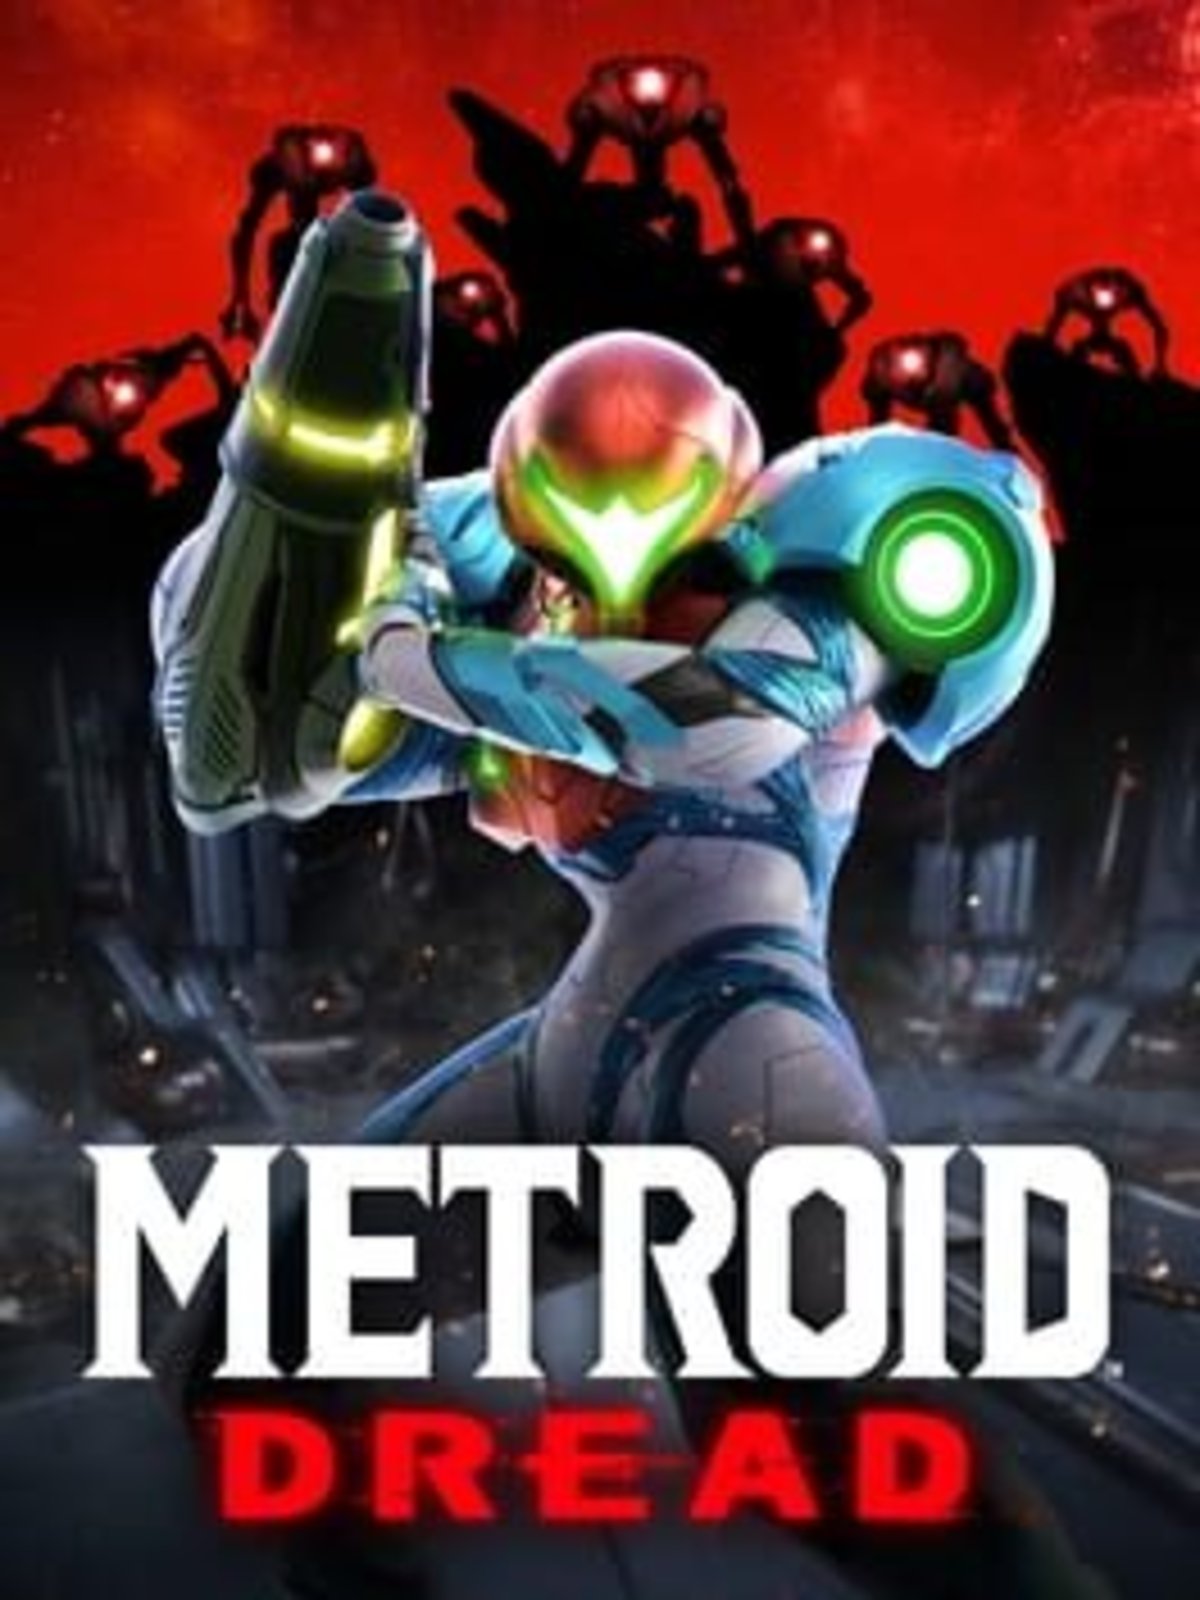 Metroid Dread Impressions - The Most Anticipated Return